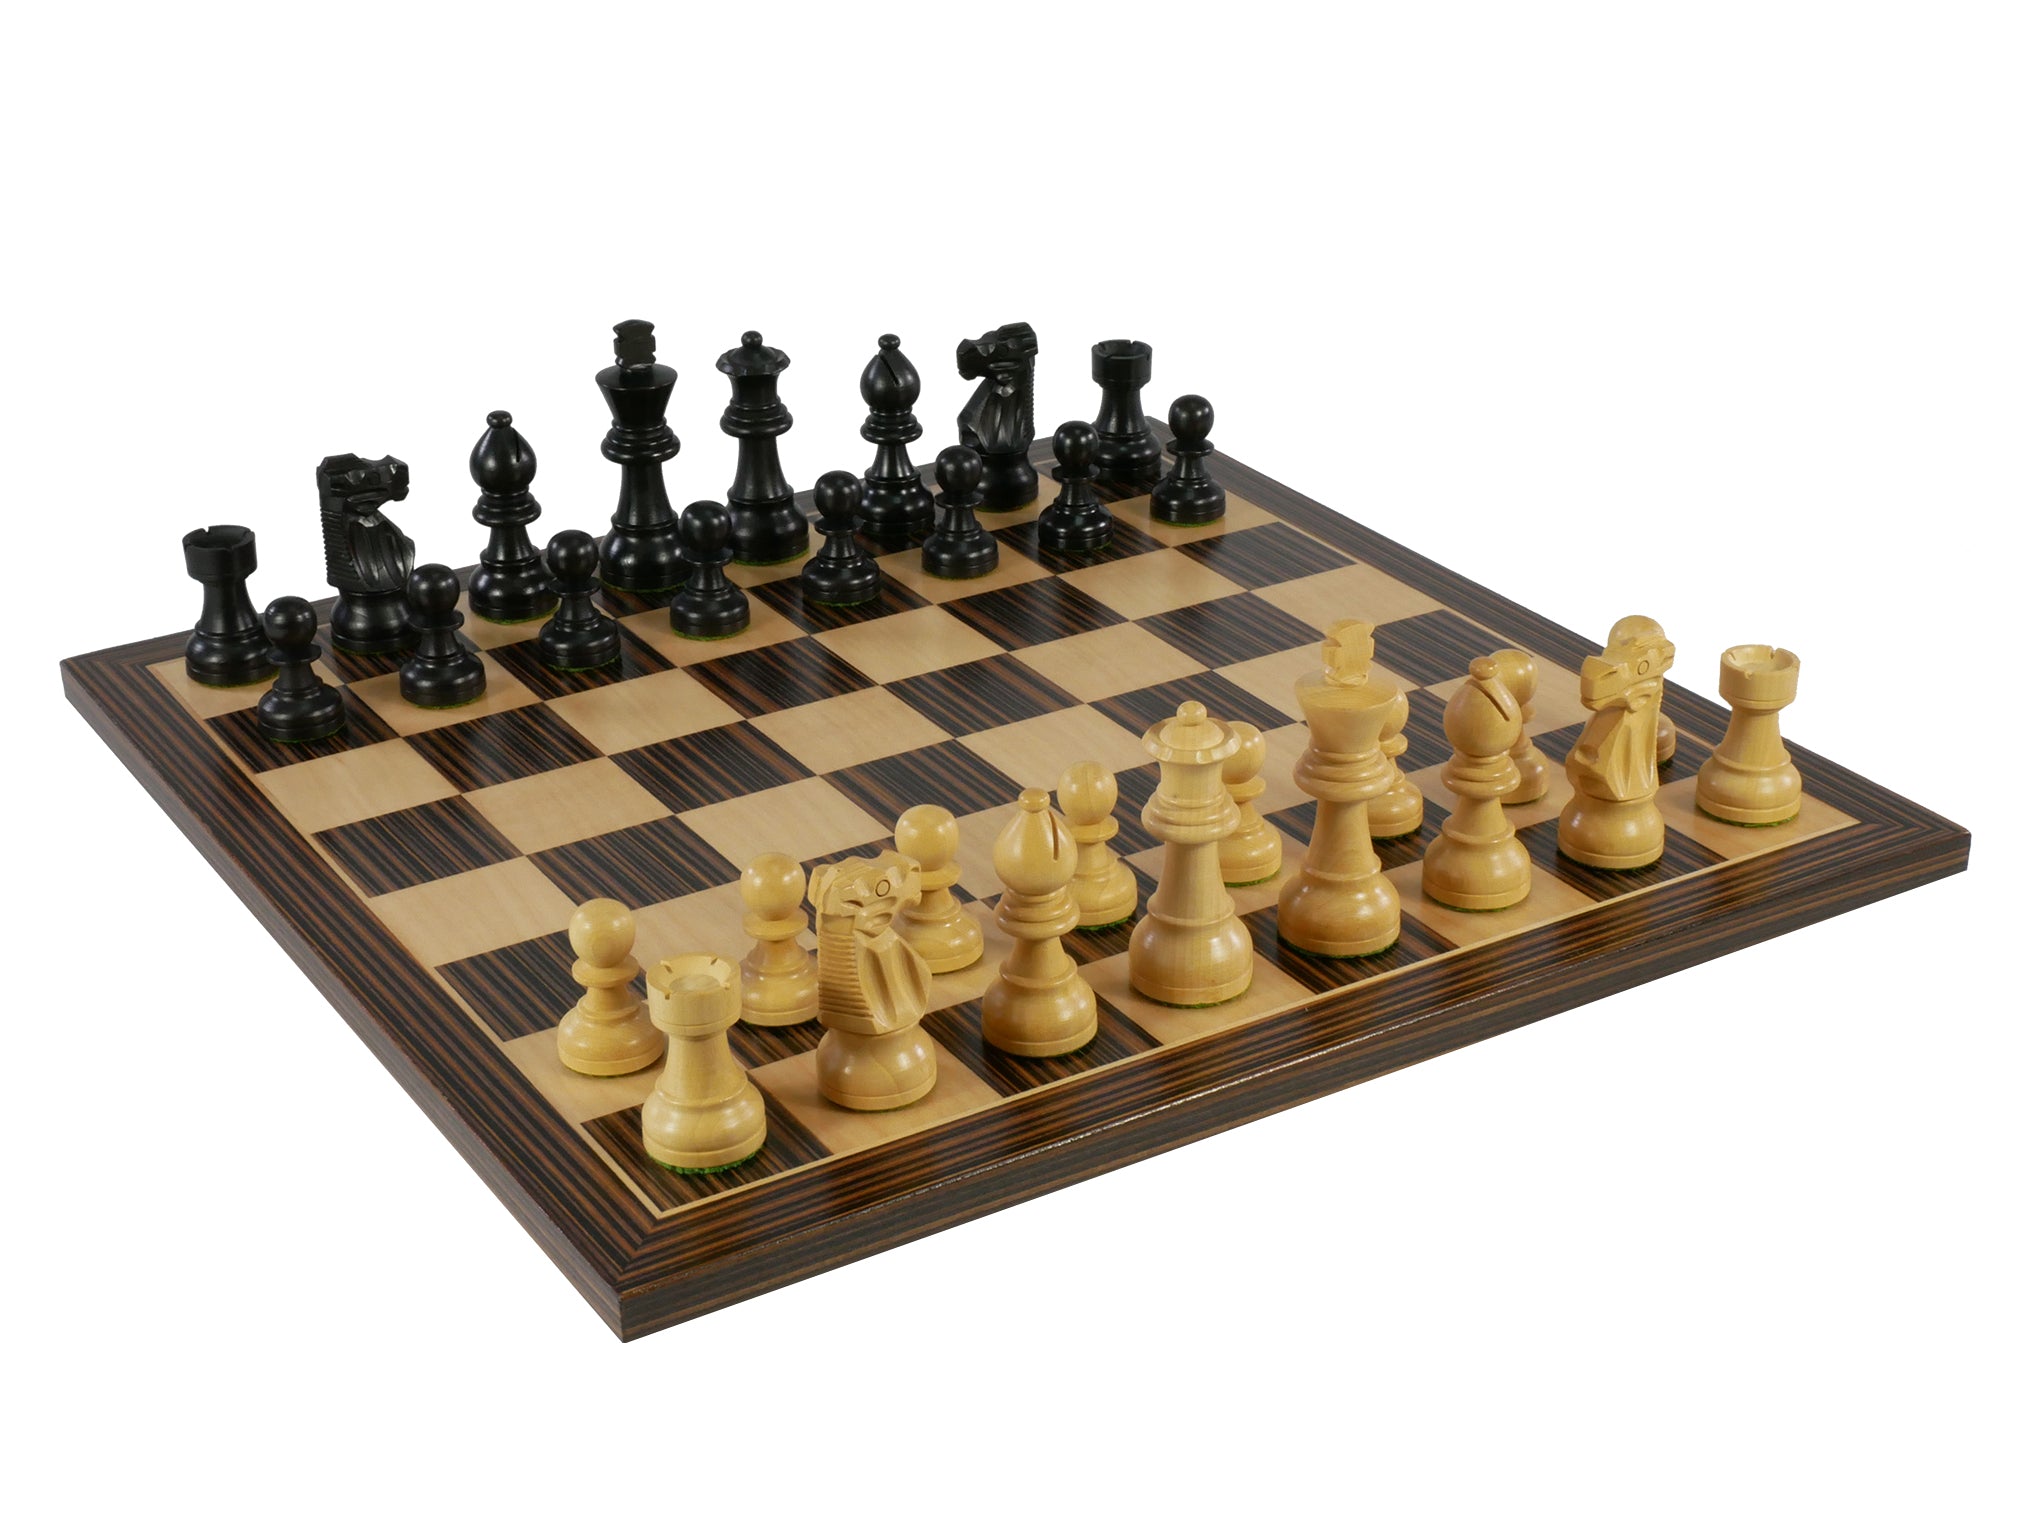 Chess Set - Small Black French Chessmen on Ebony veneer Chess Board